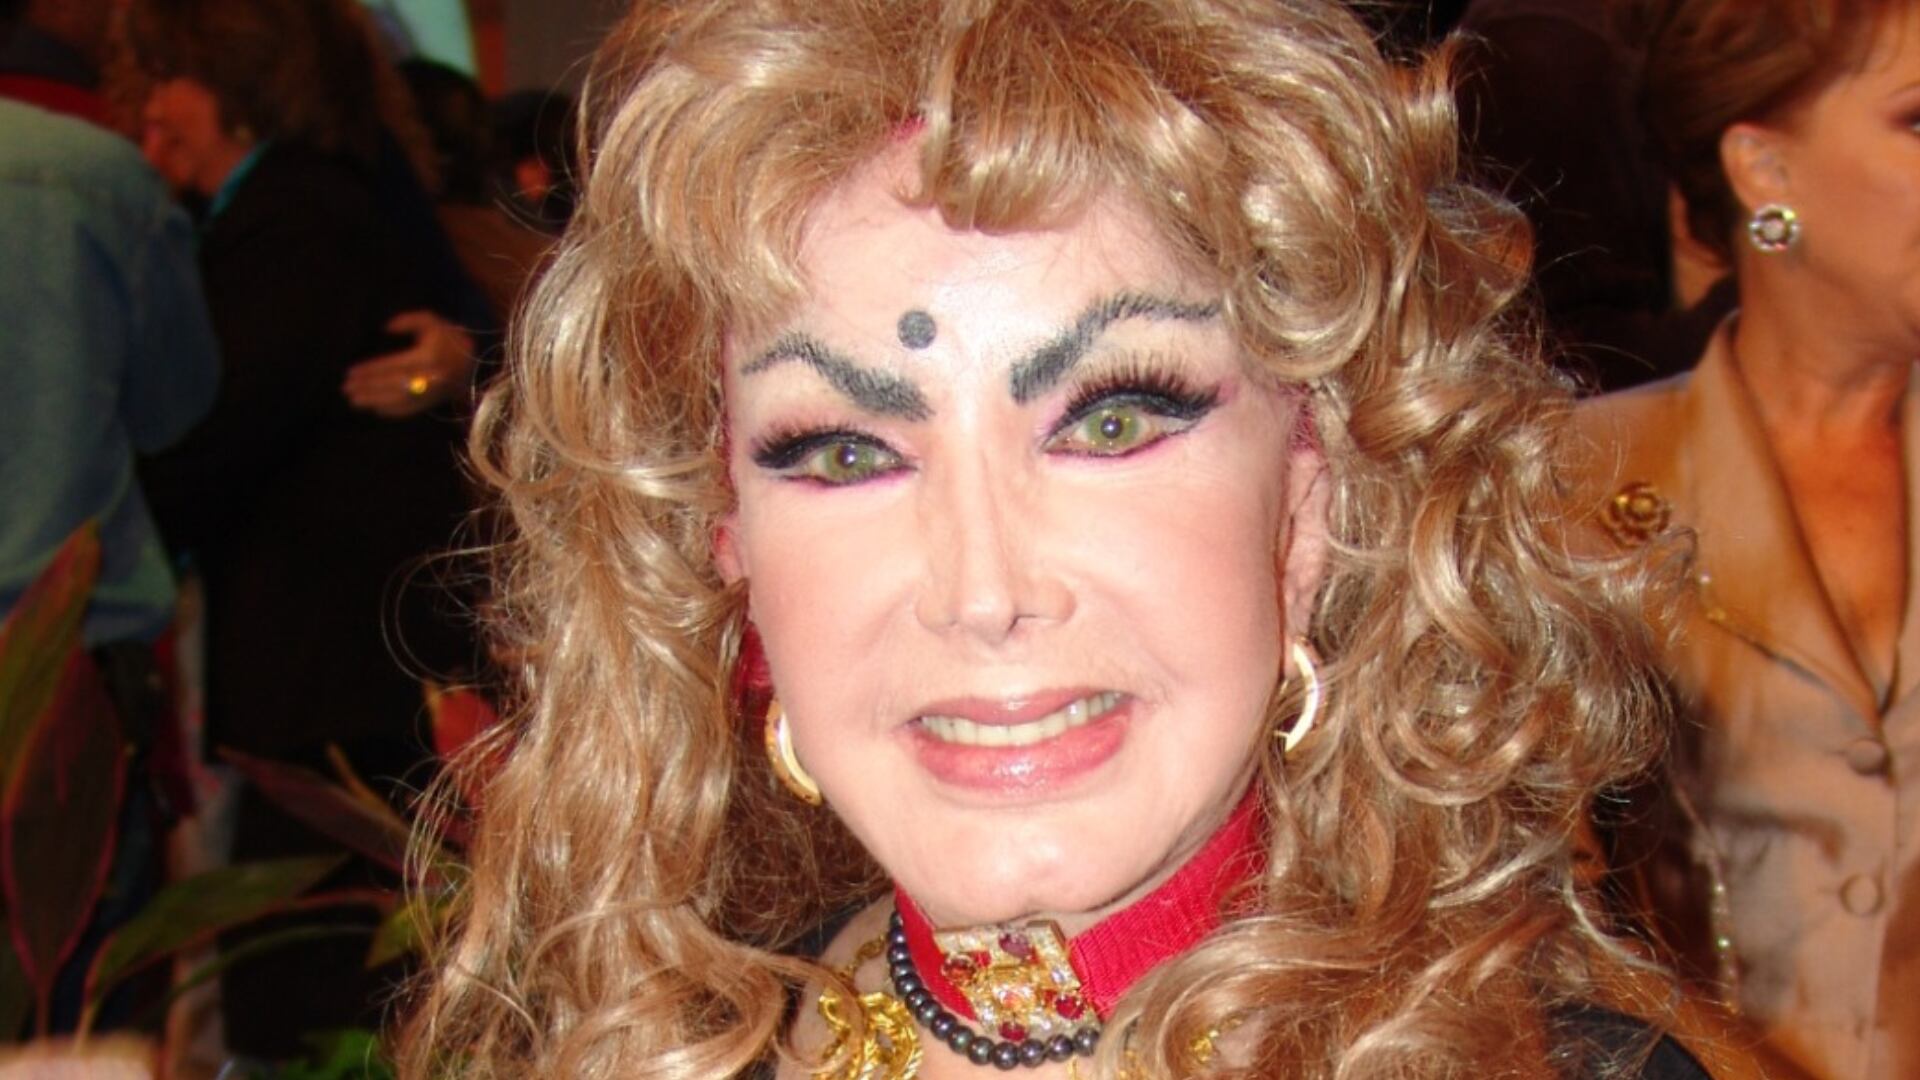 Irma Serrano